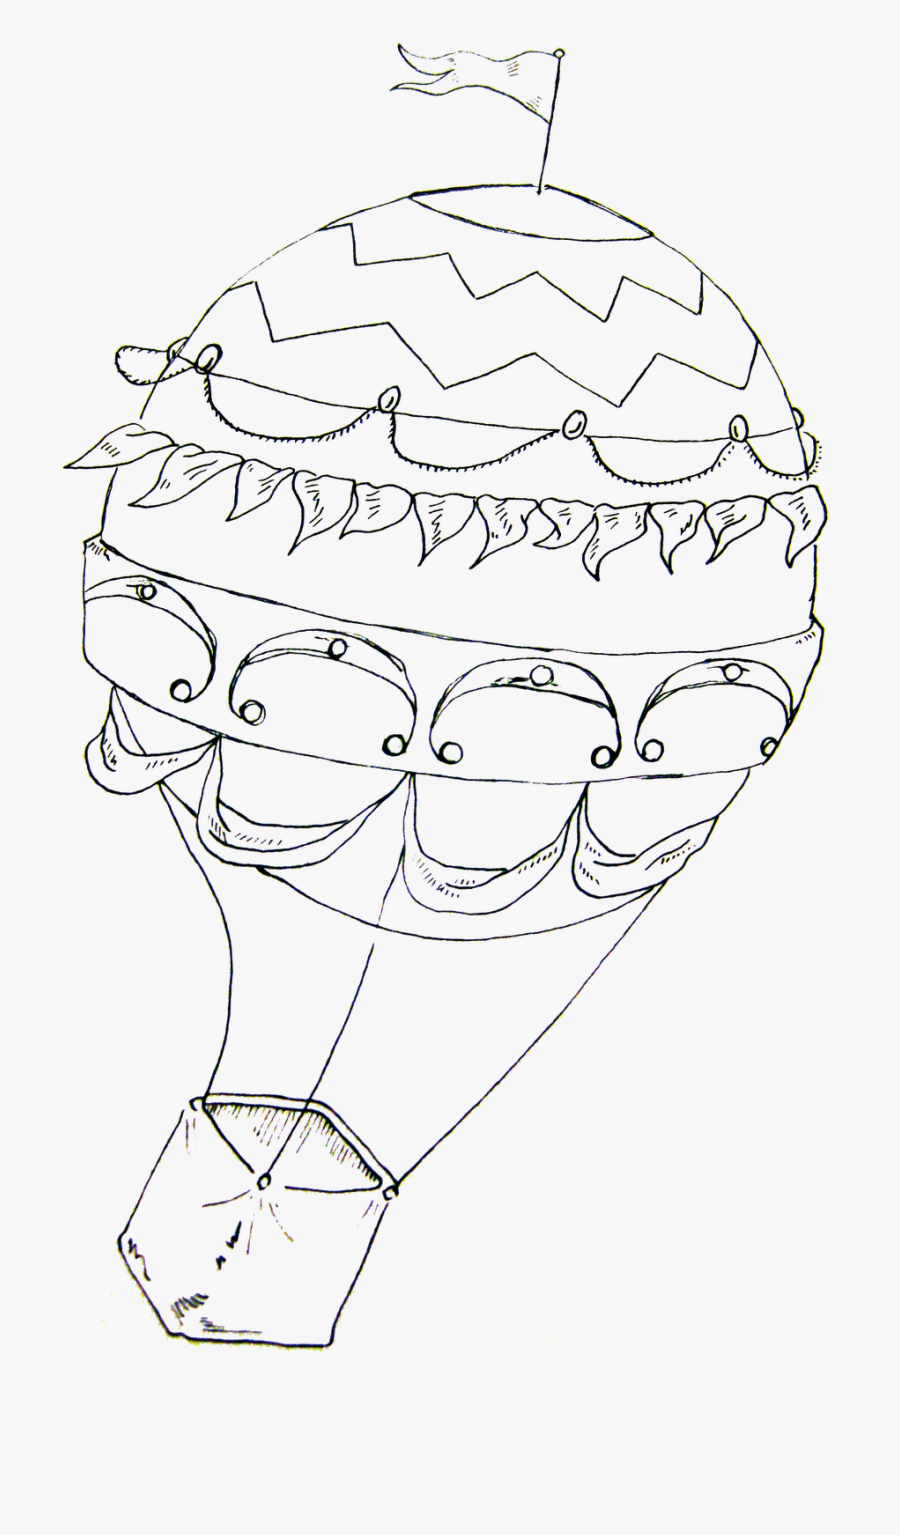 Hot Air Balloon Drawing Png, Transparent Clipart